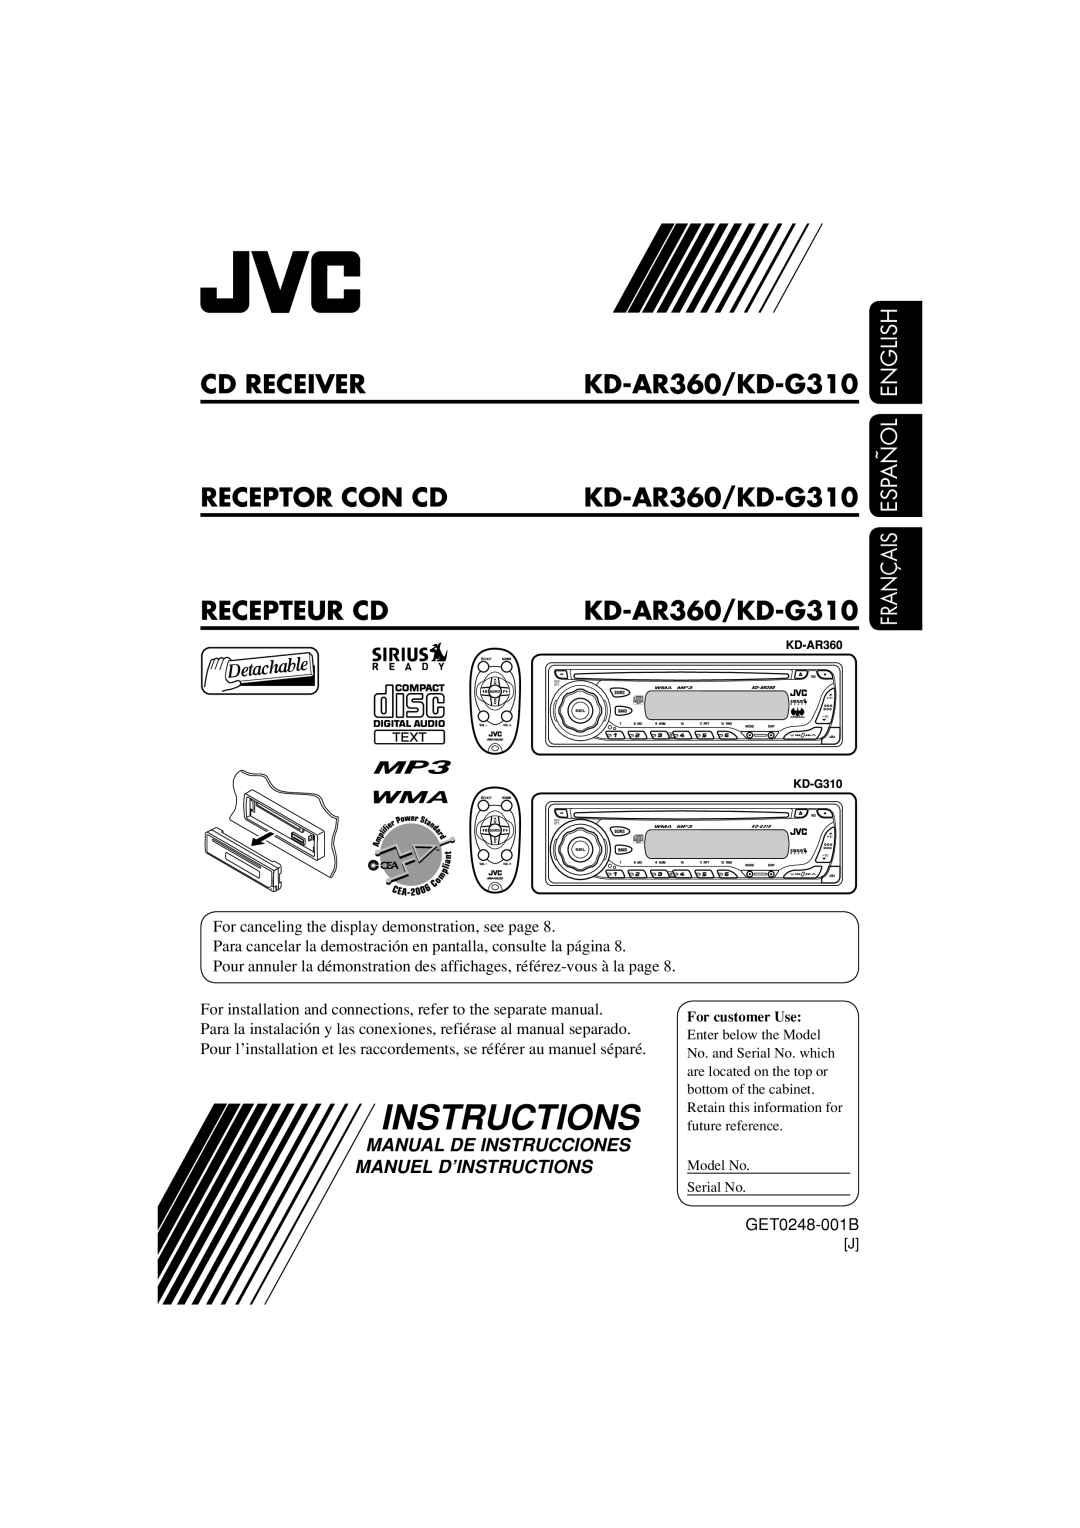 JVC manual Cd Receiver Receptor Con Cd Recepteur Cd, KD-AR360/KD-G310 KD-AR360/KD-G310, Français Español English 